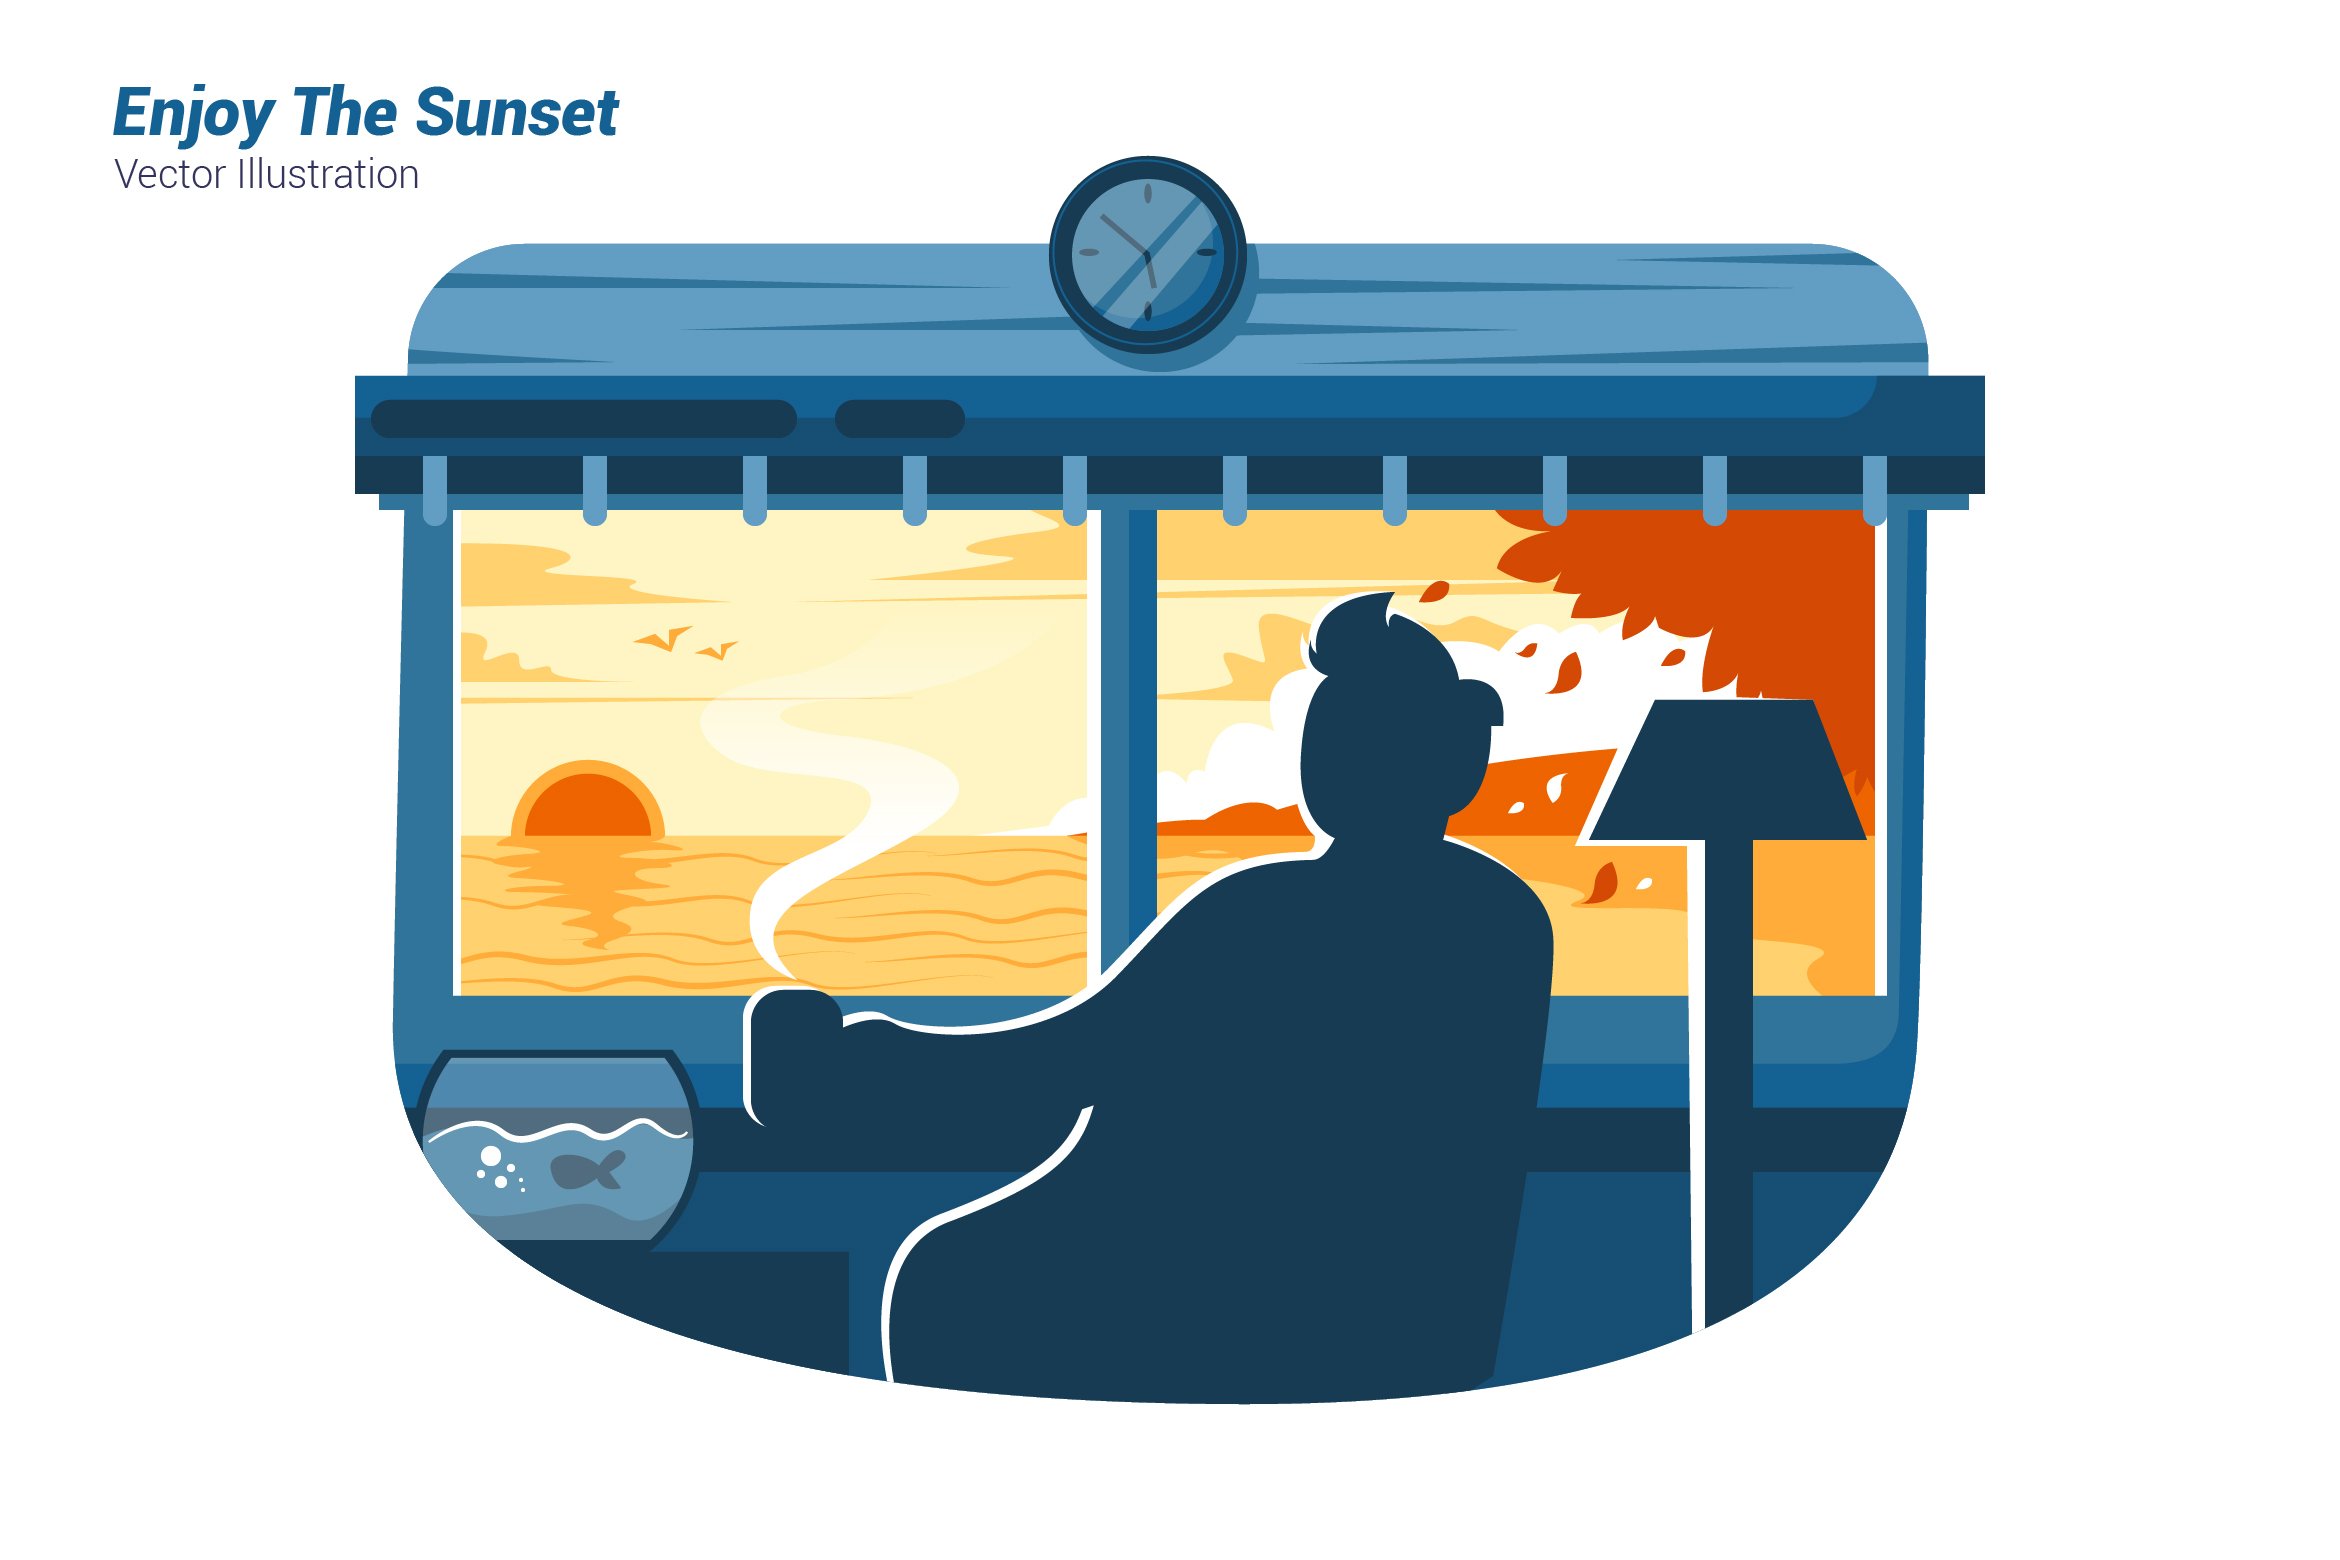 Enjoy The Sunset-Vector Illustration cover image.